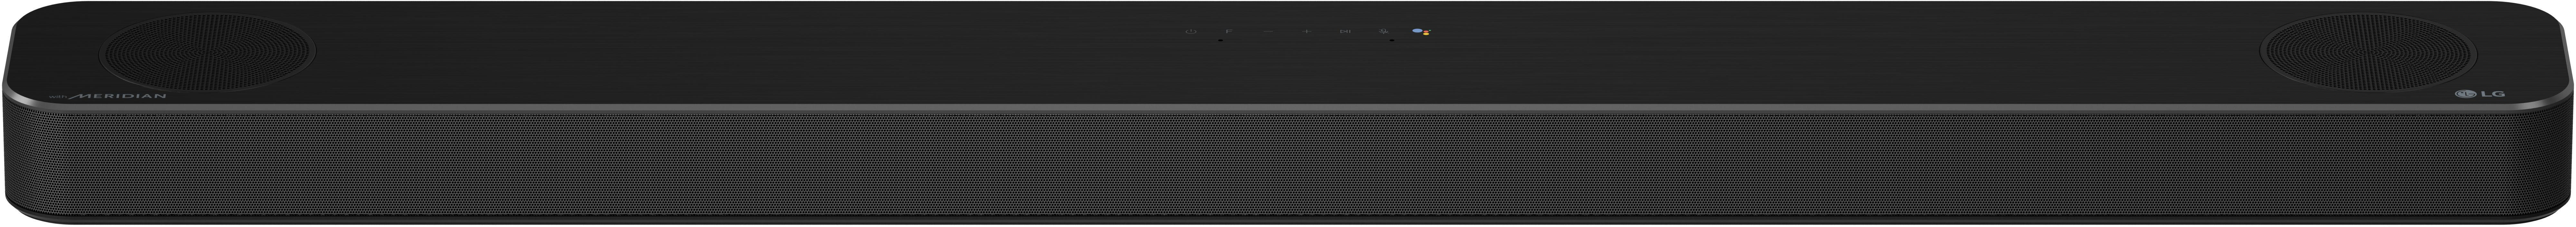 LG Dark Silver Soundbar, DSN8YG, Steel